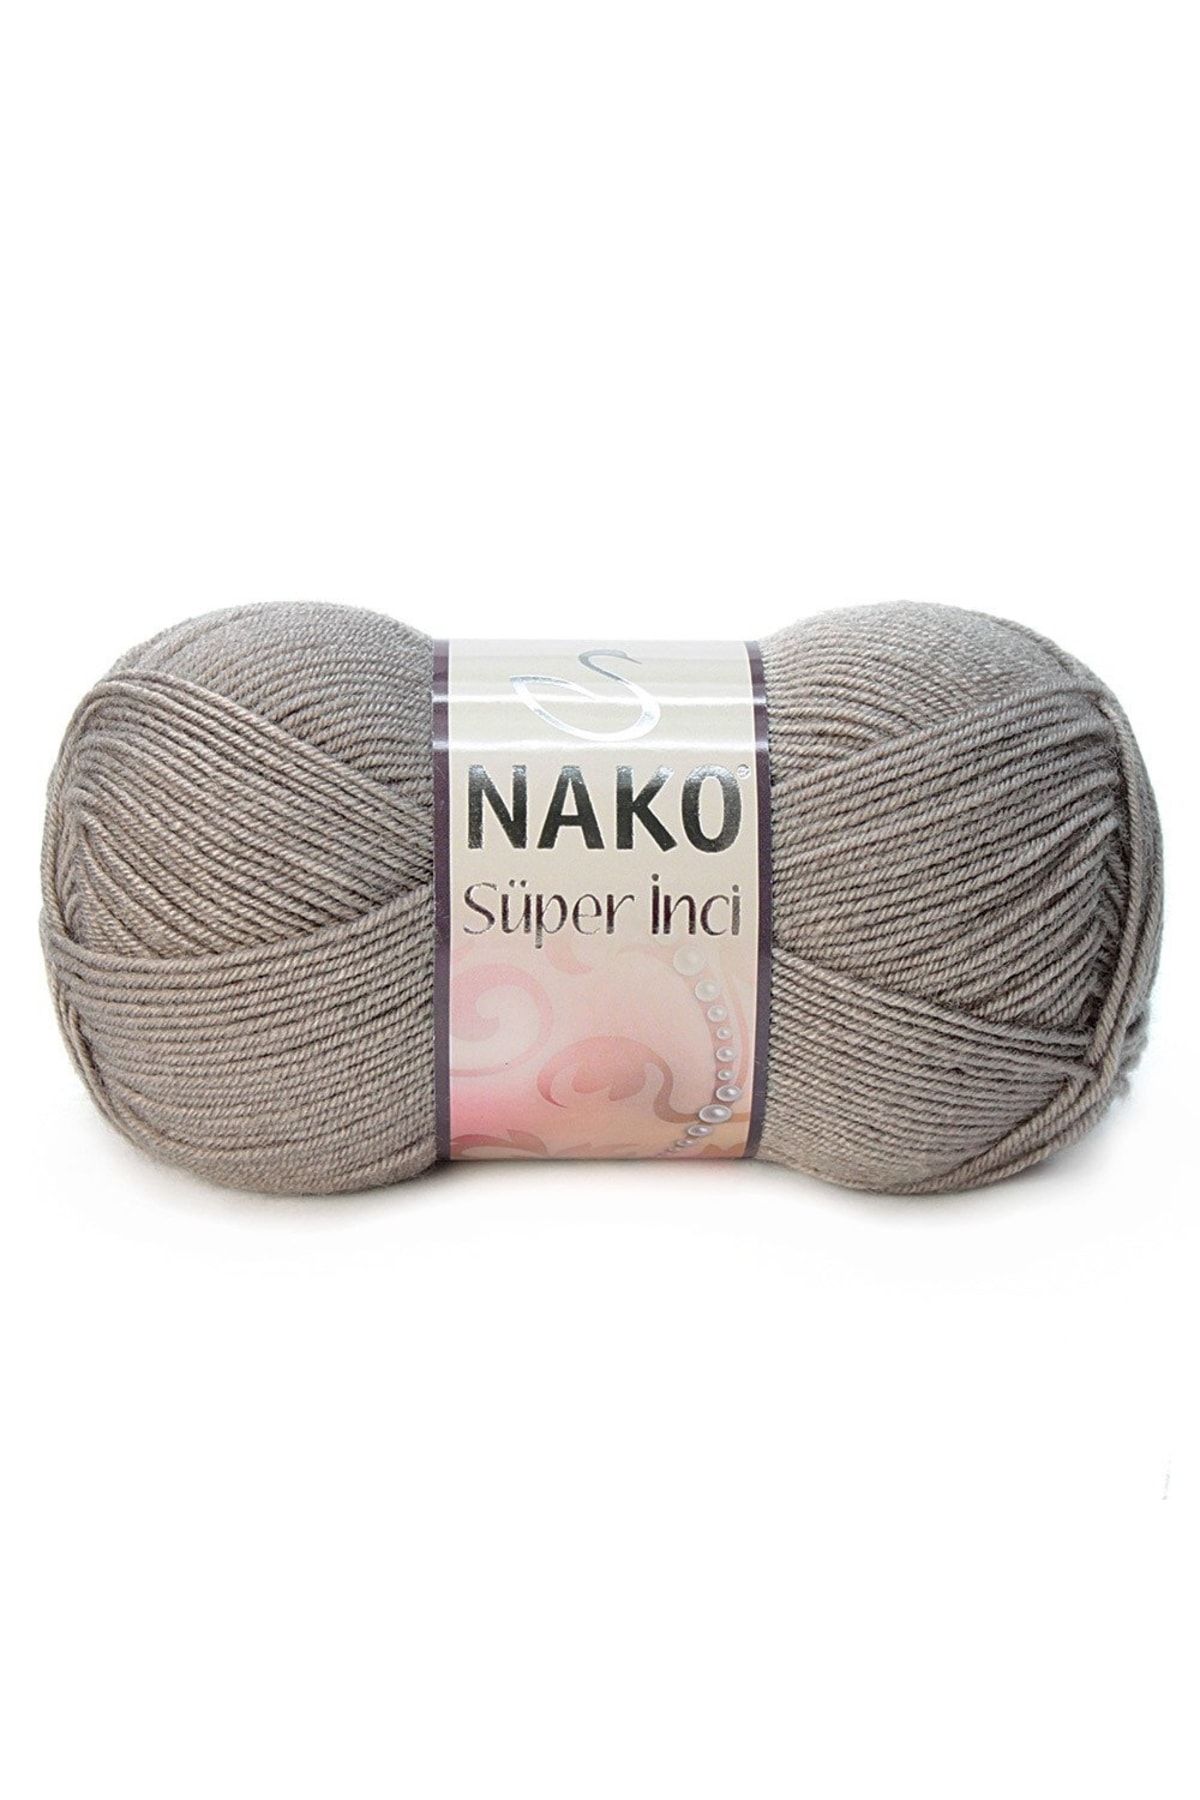 Nako Süper Inci Örgü Ipleri